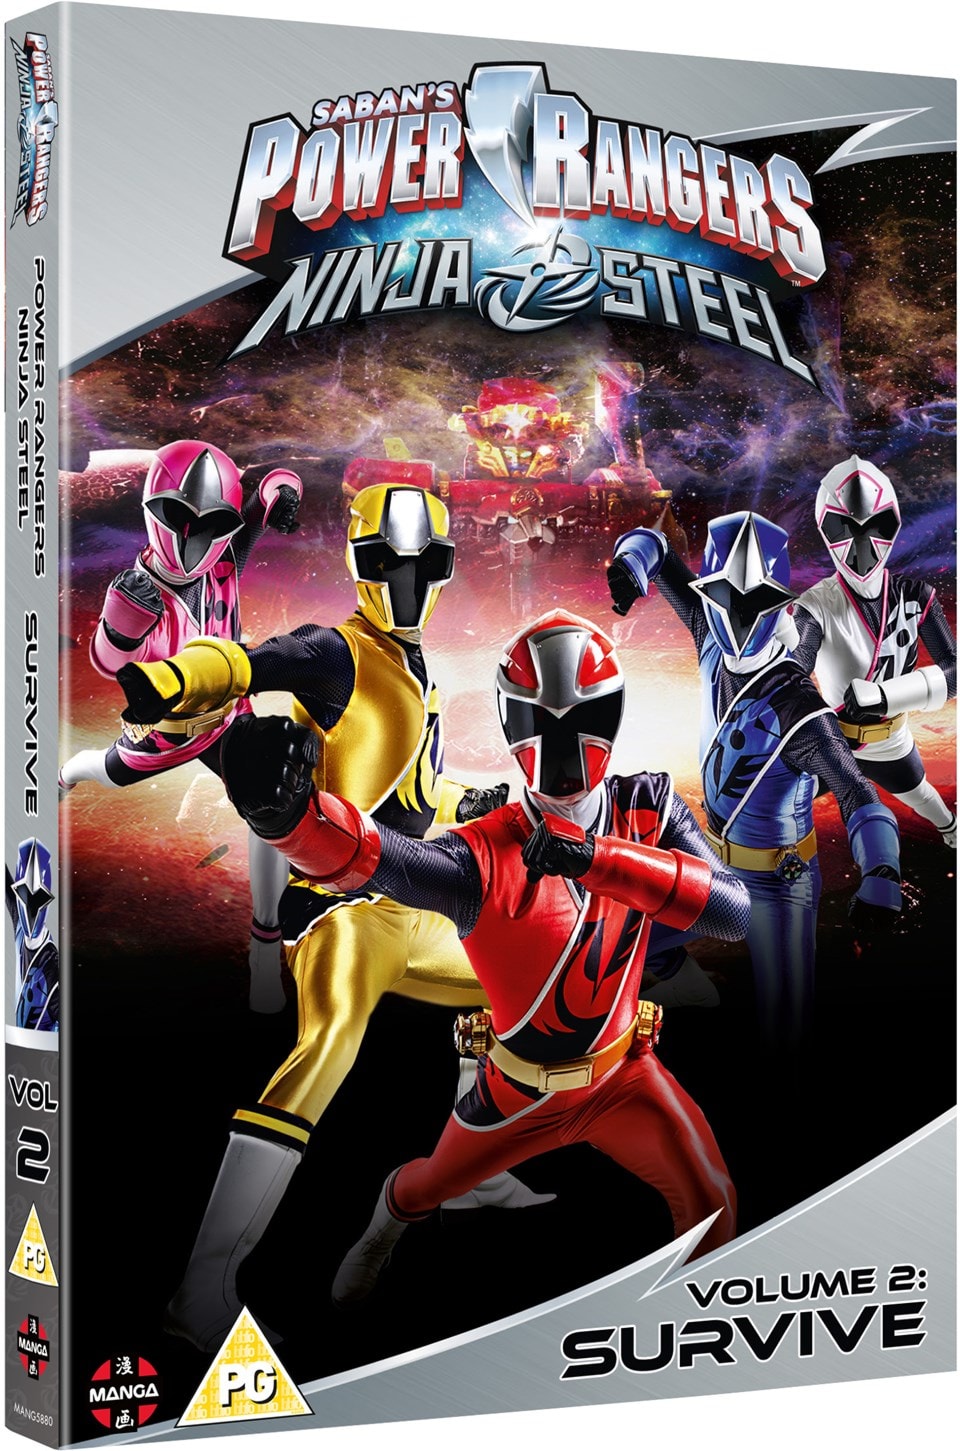 Power Rangers Ninja Steel Volume 2 Survive DVD Free Shipping